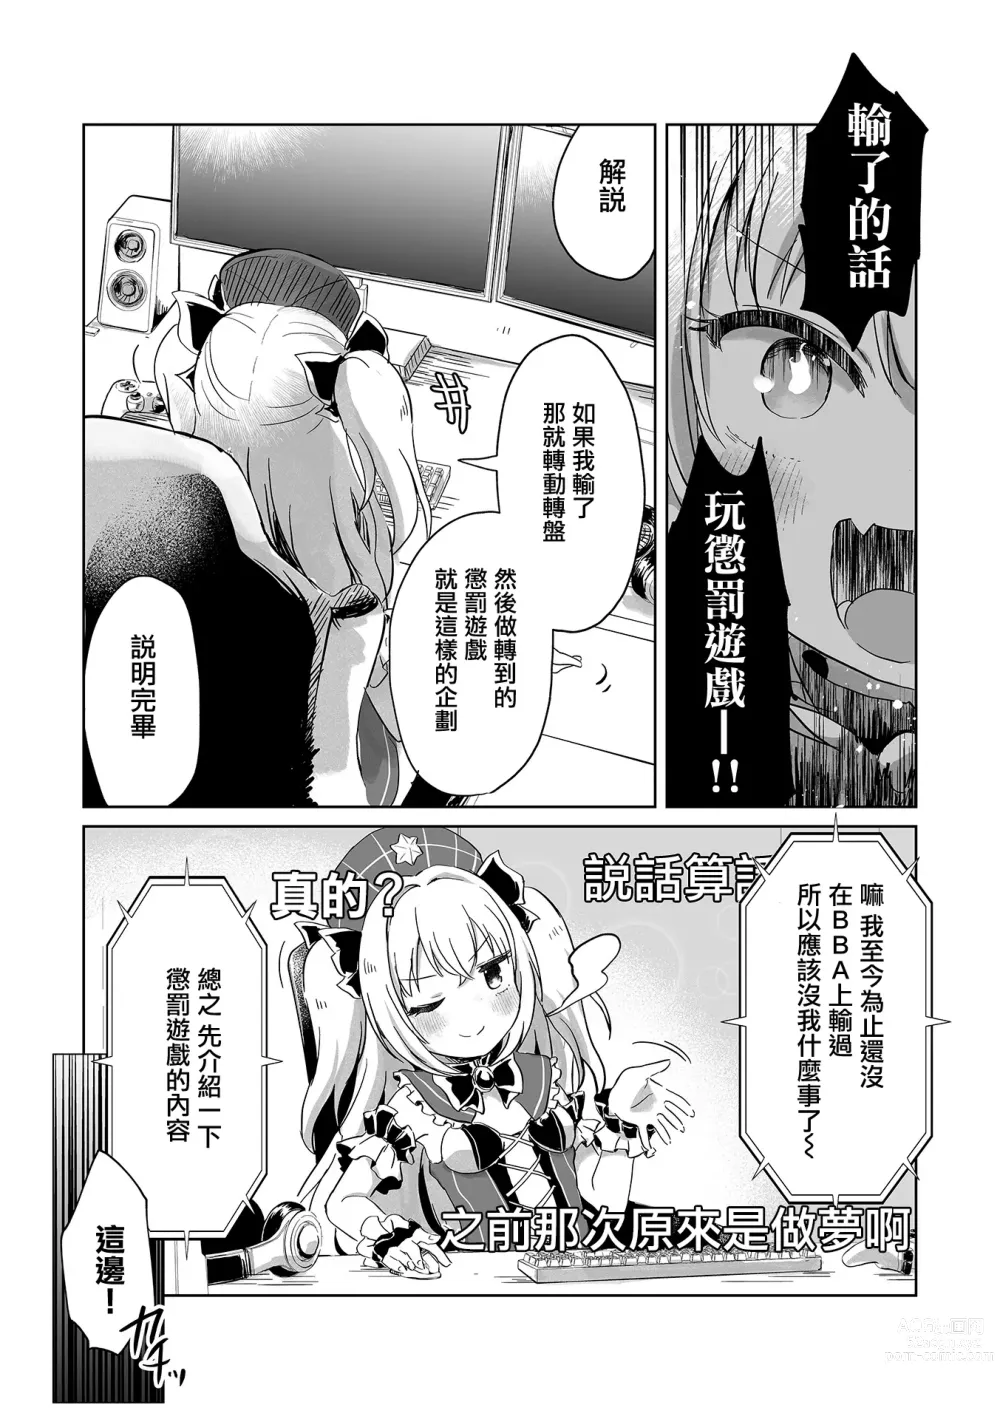 Page 3 of manga Offline Matching